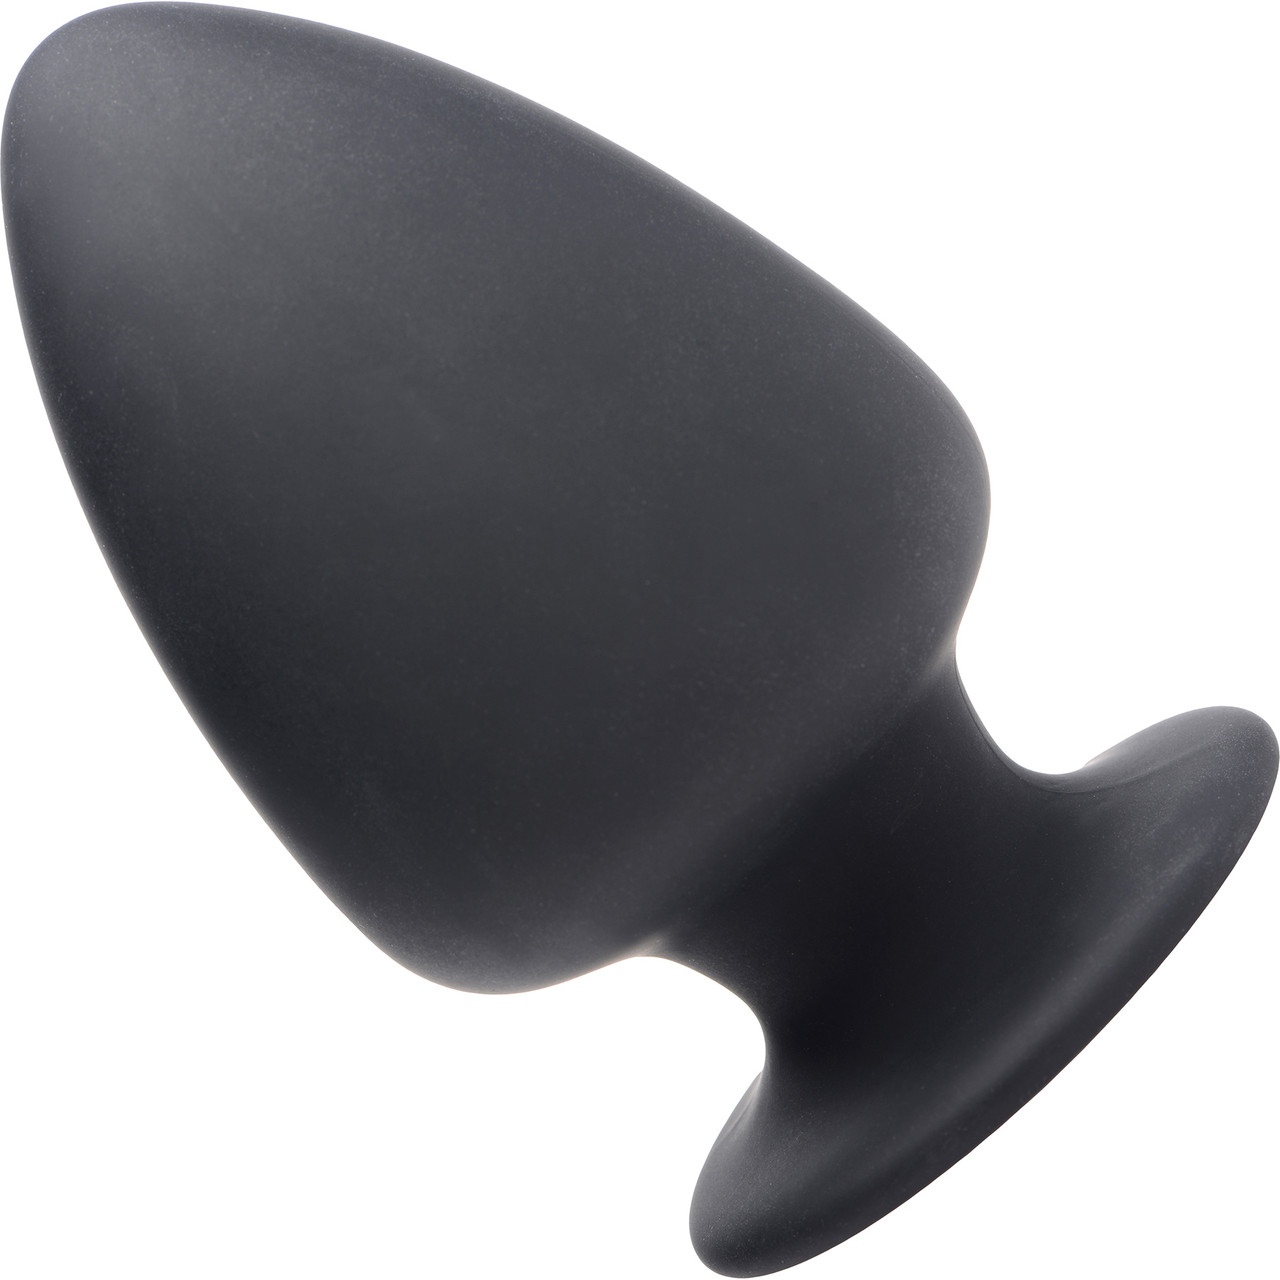 Squeeze-It Squeezable Silicone Anal Plug, Medium - Black